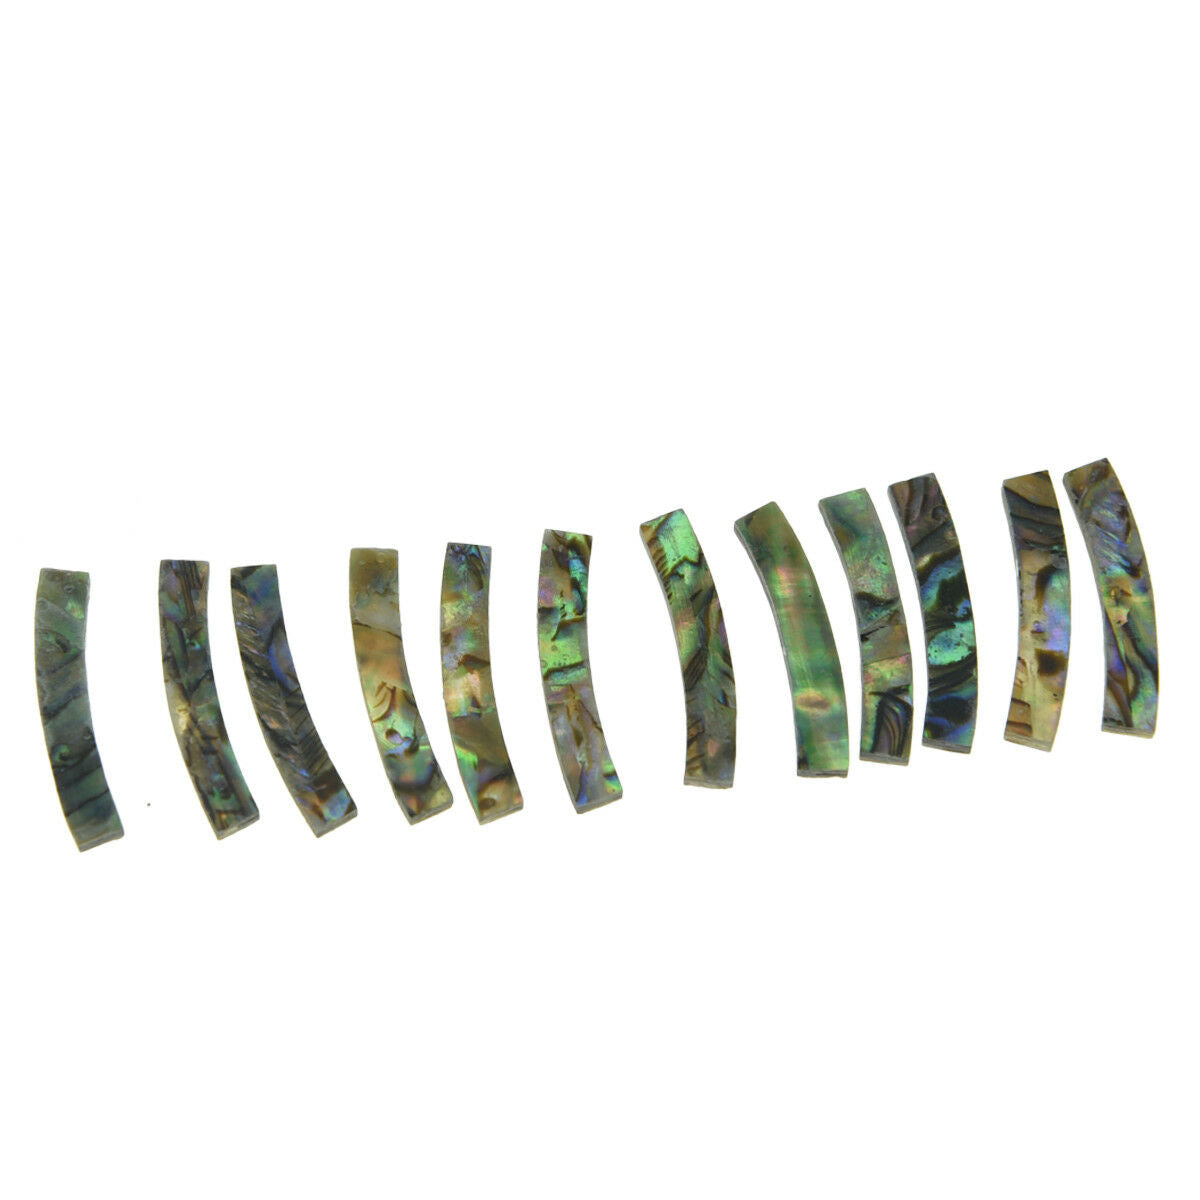 Ukulele Rosette Paua Abalone Shell Curved Strips Soundhole Inlay 75x3mm